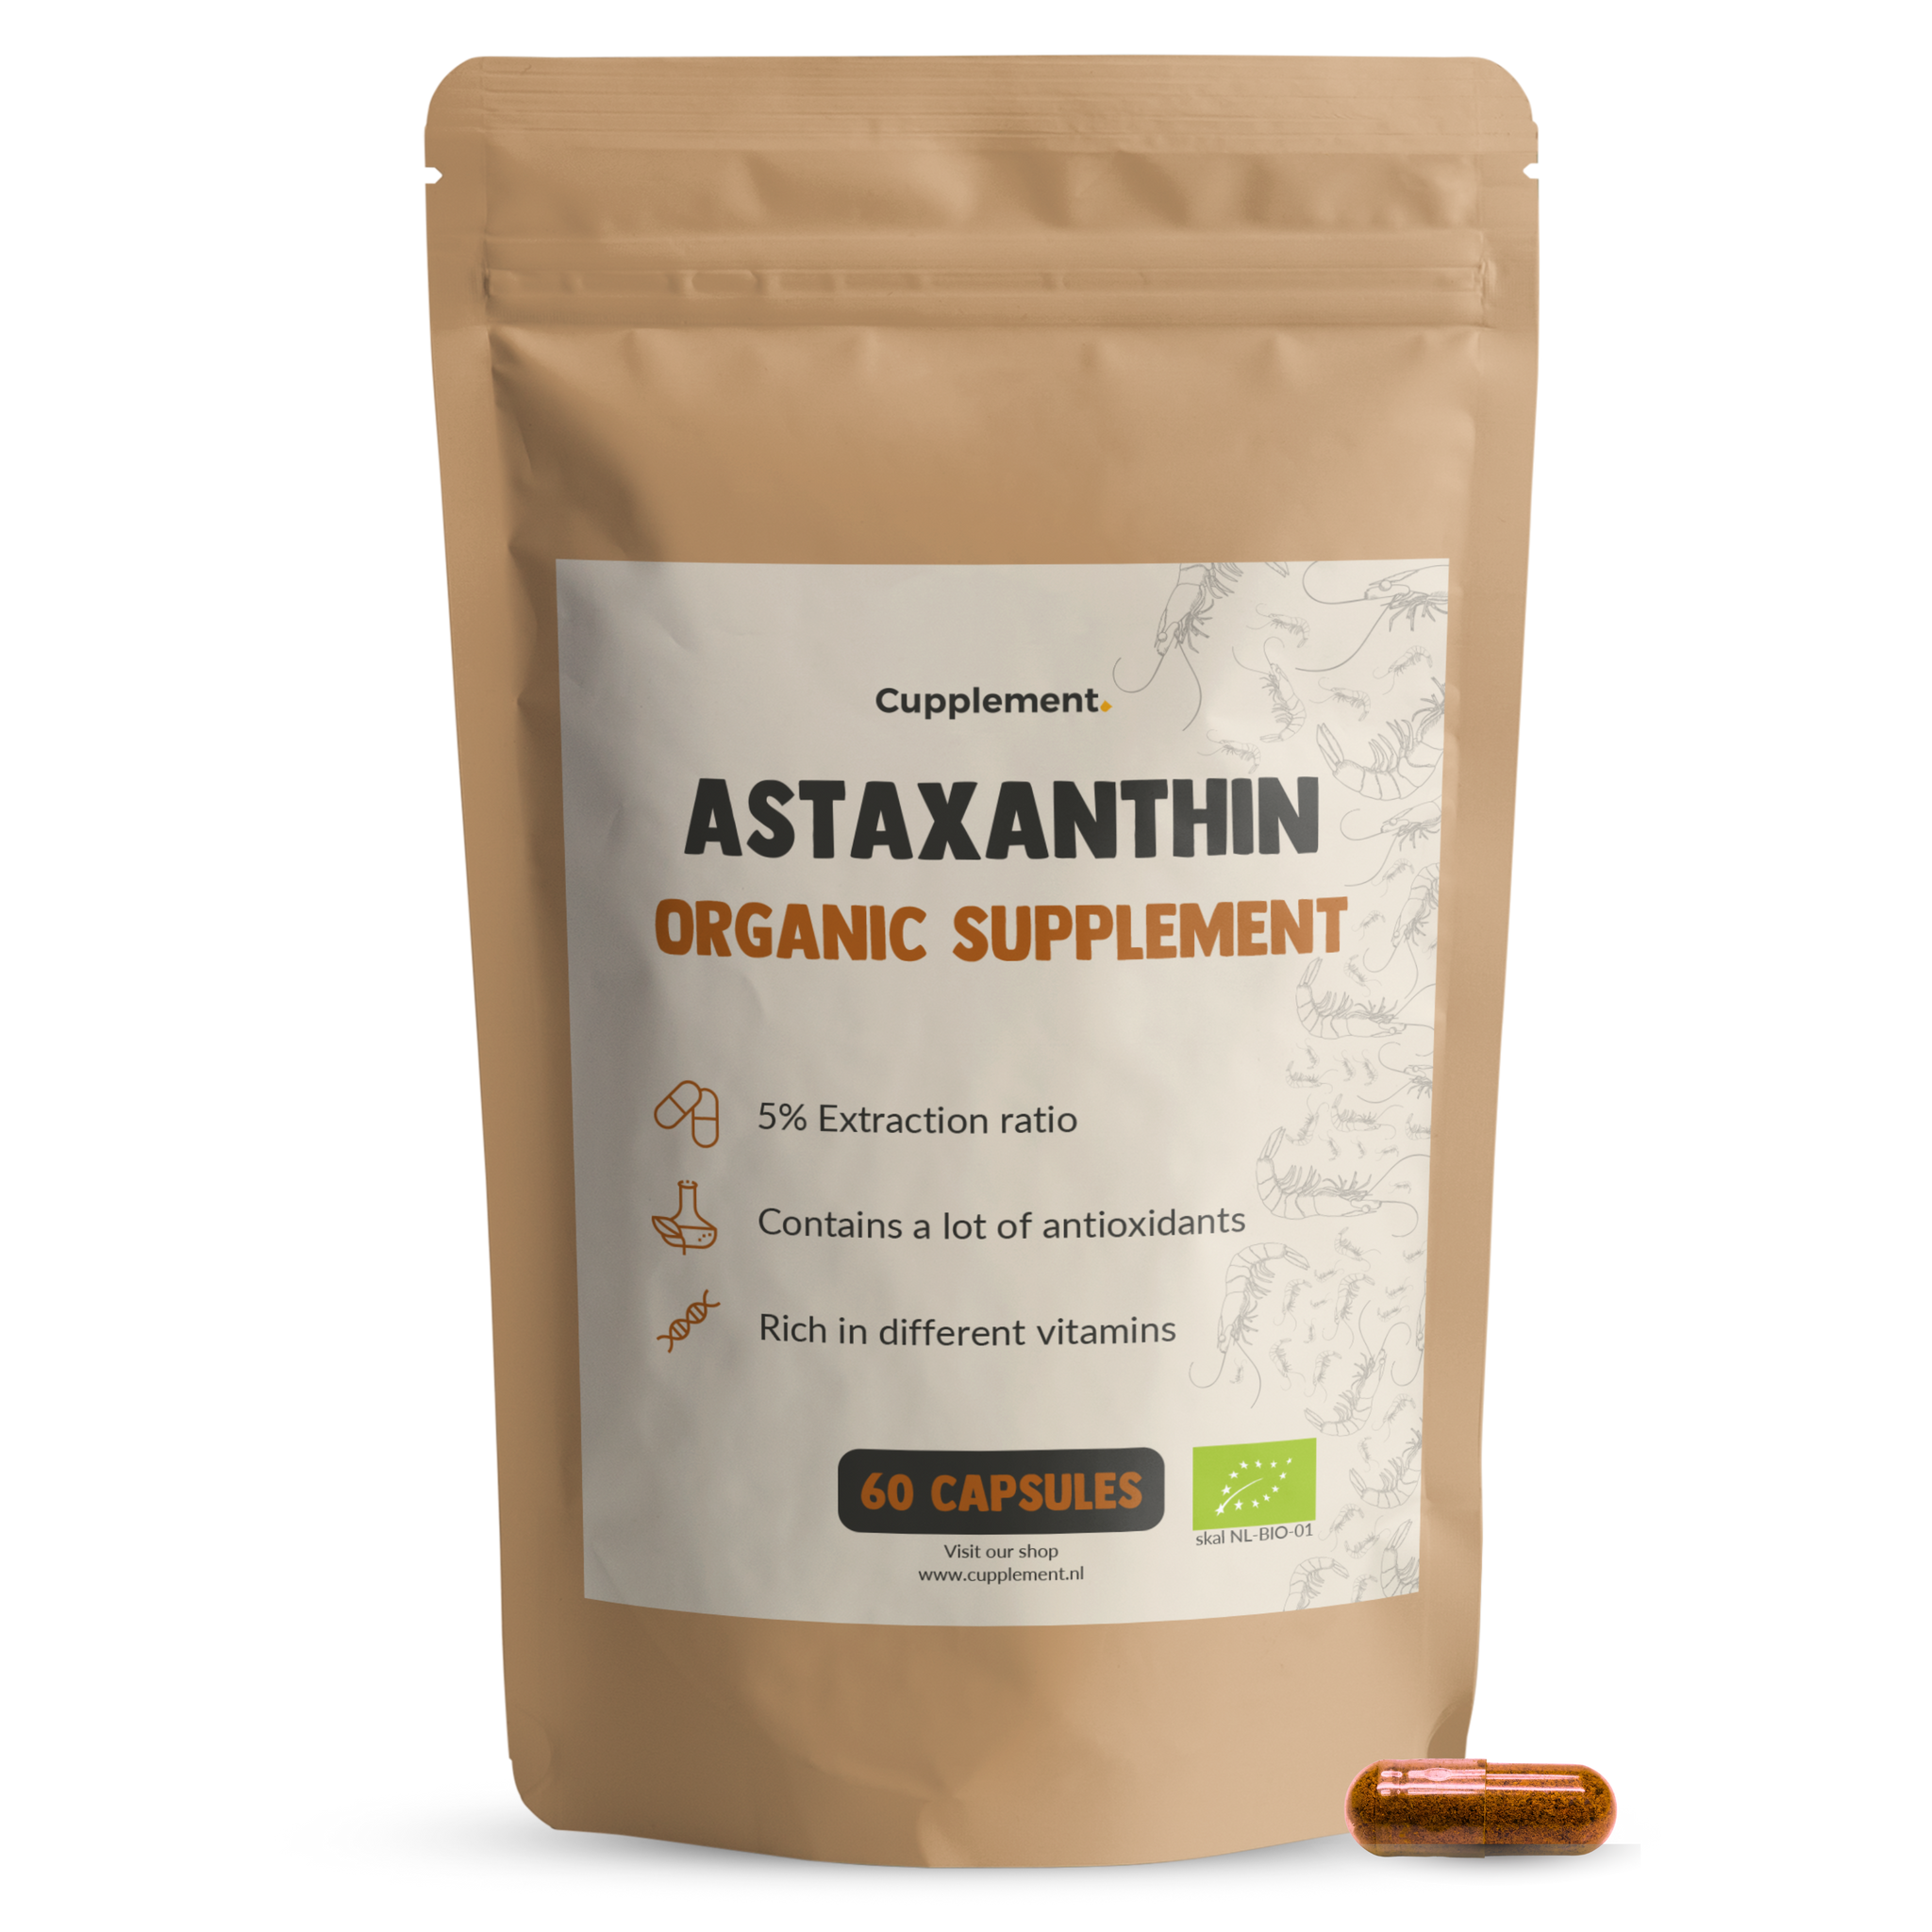 Astaxanthin Capsules organic